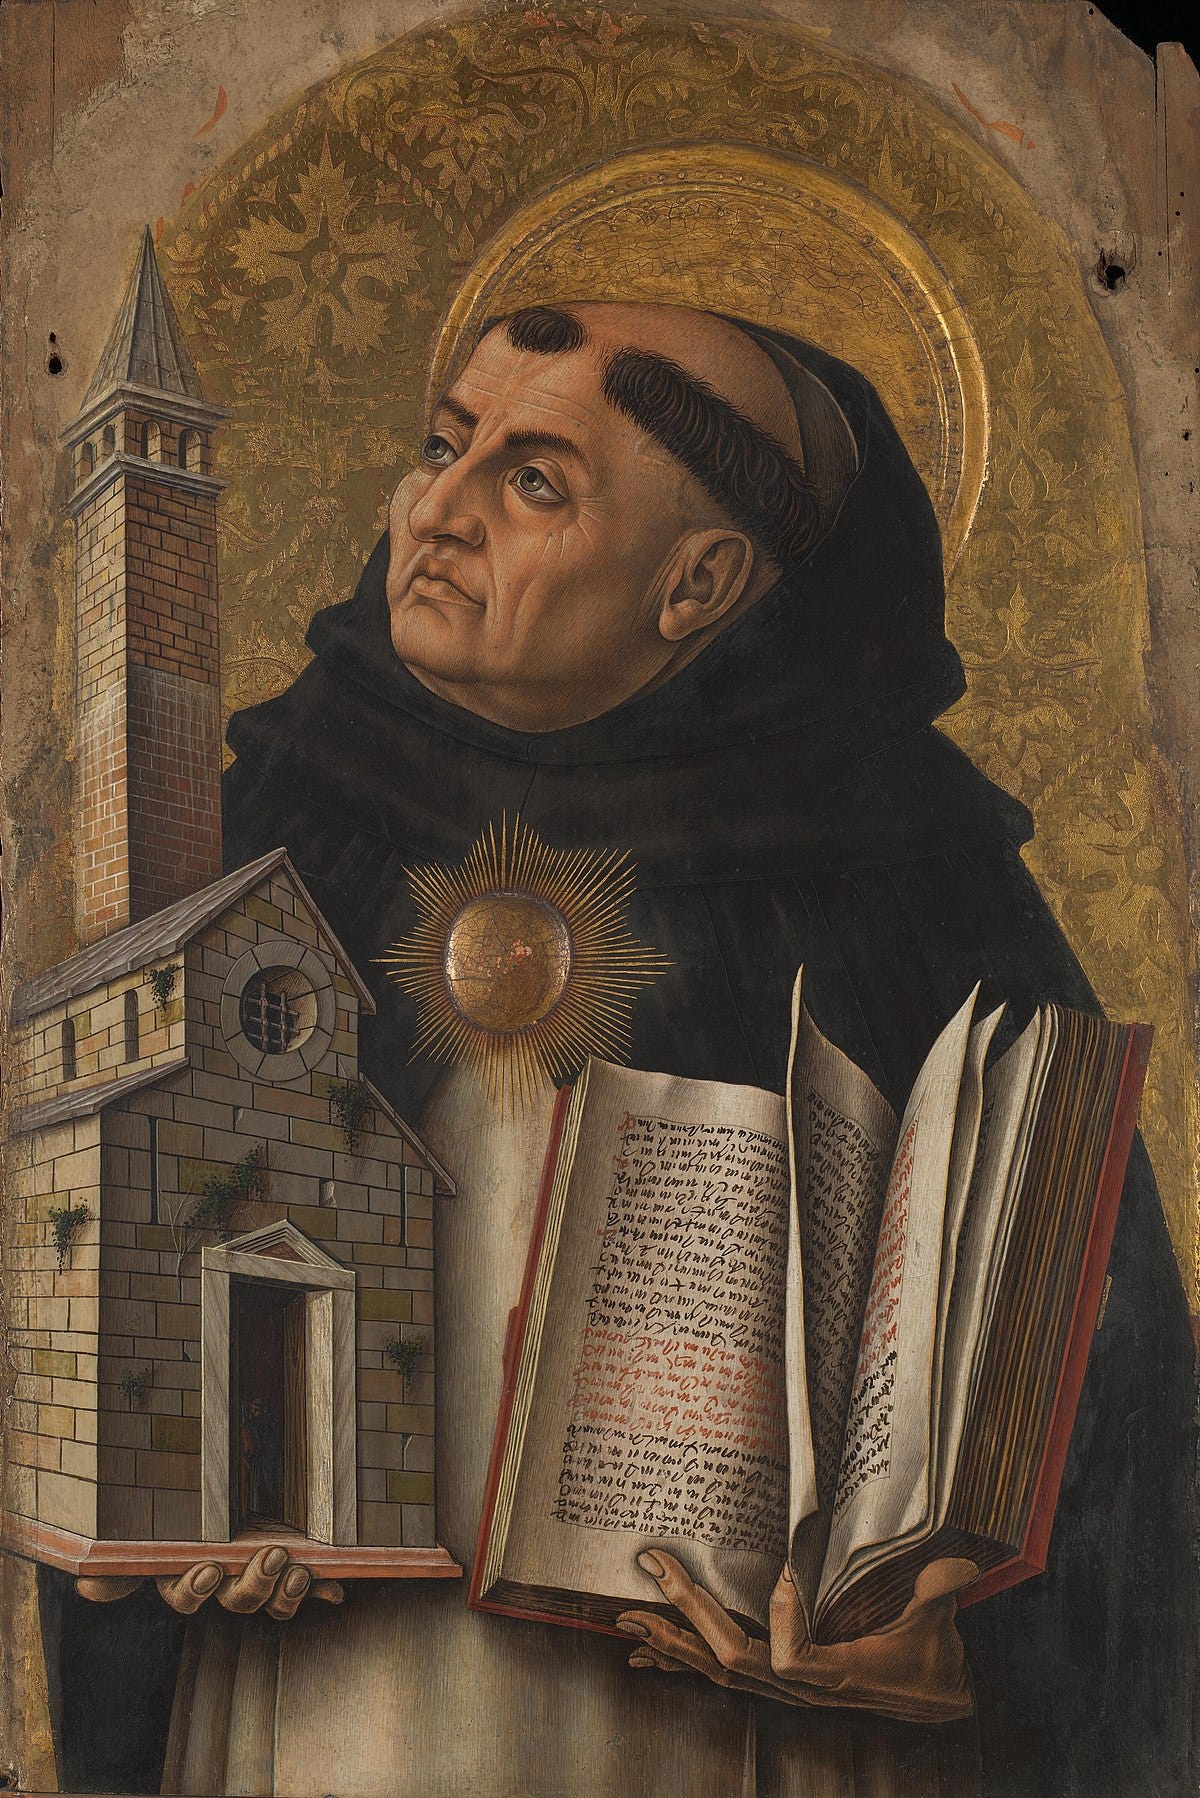 Thomas Aquinas - Wikipedia